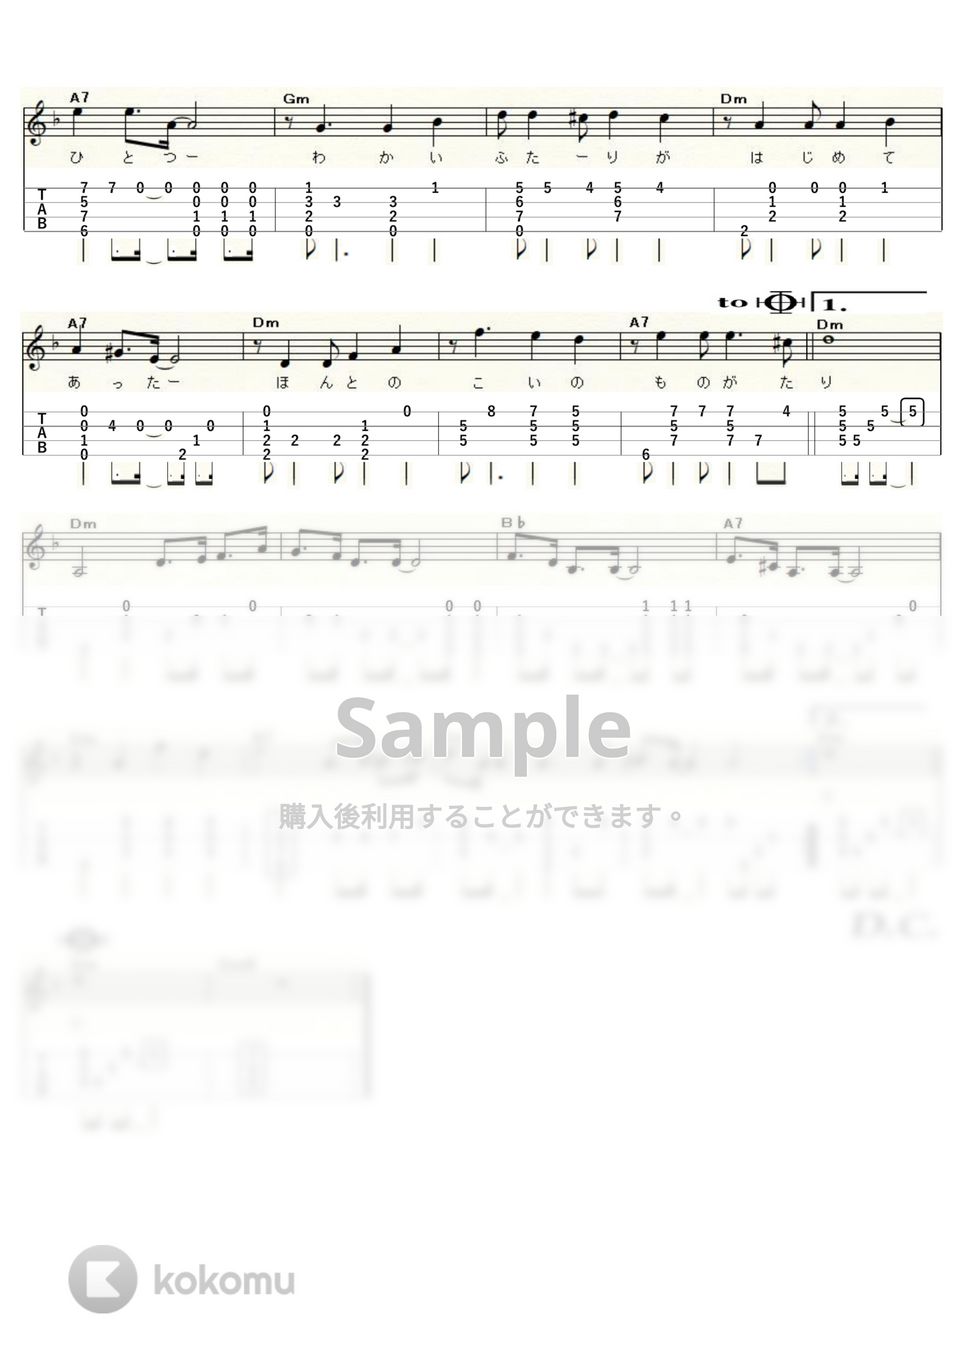 石原裕次郎・牧村旬子 - 銀座の恋の物語 (ｳｸﾚﾚｿﾛ/Low-G/中級) by ukulelepapa